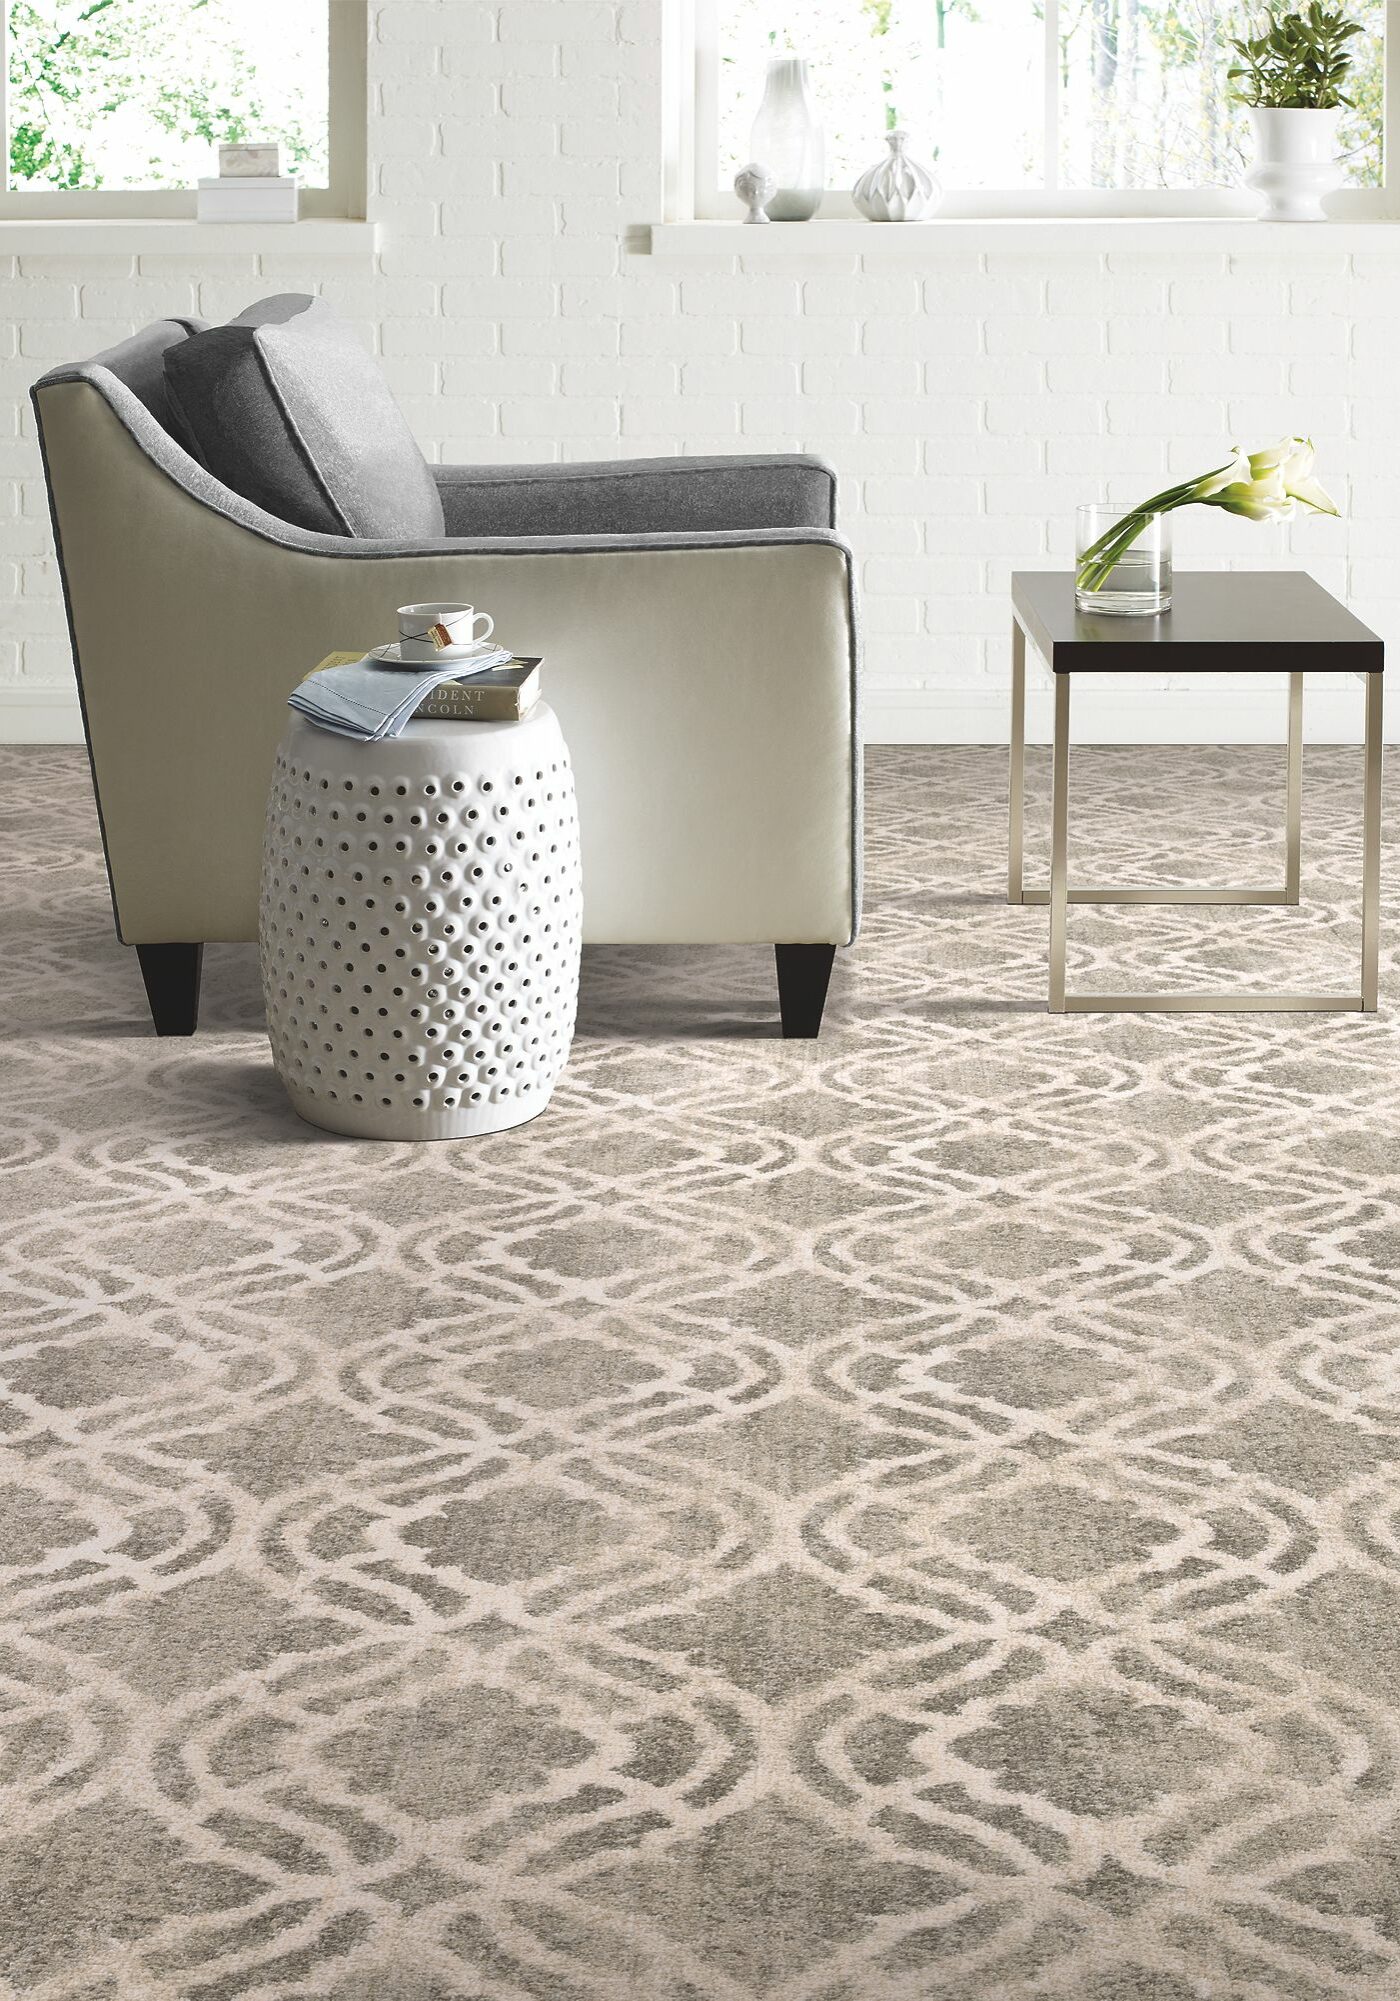 Carpet design | Great Lakes Carpet & Tile